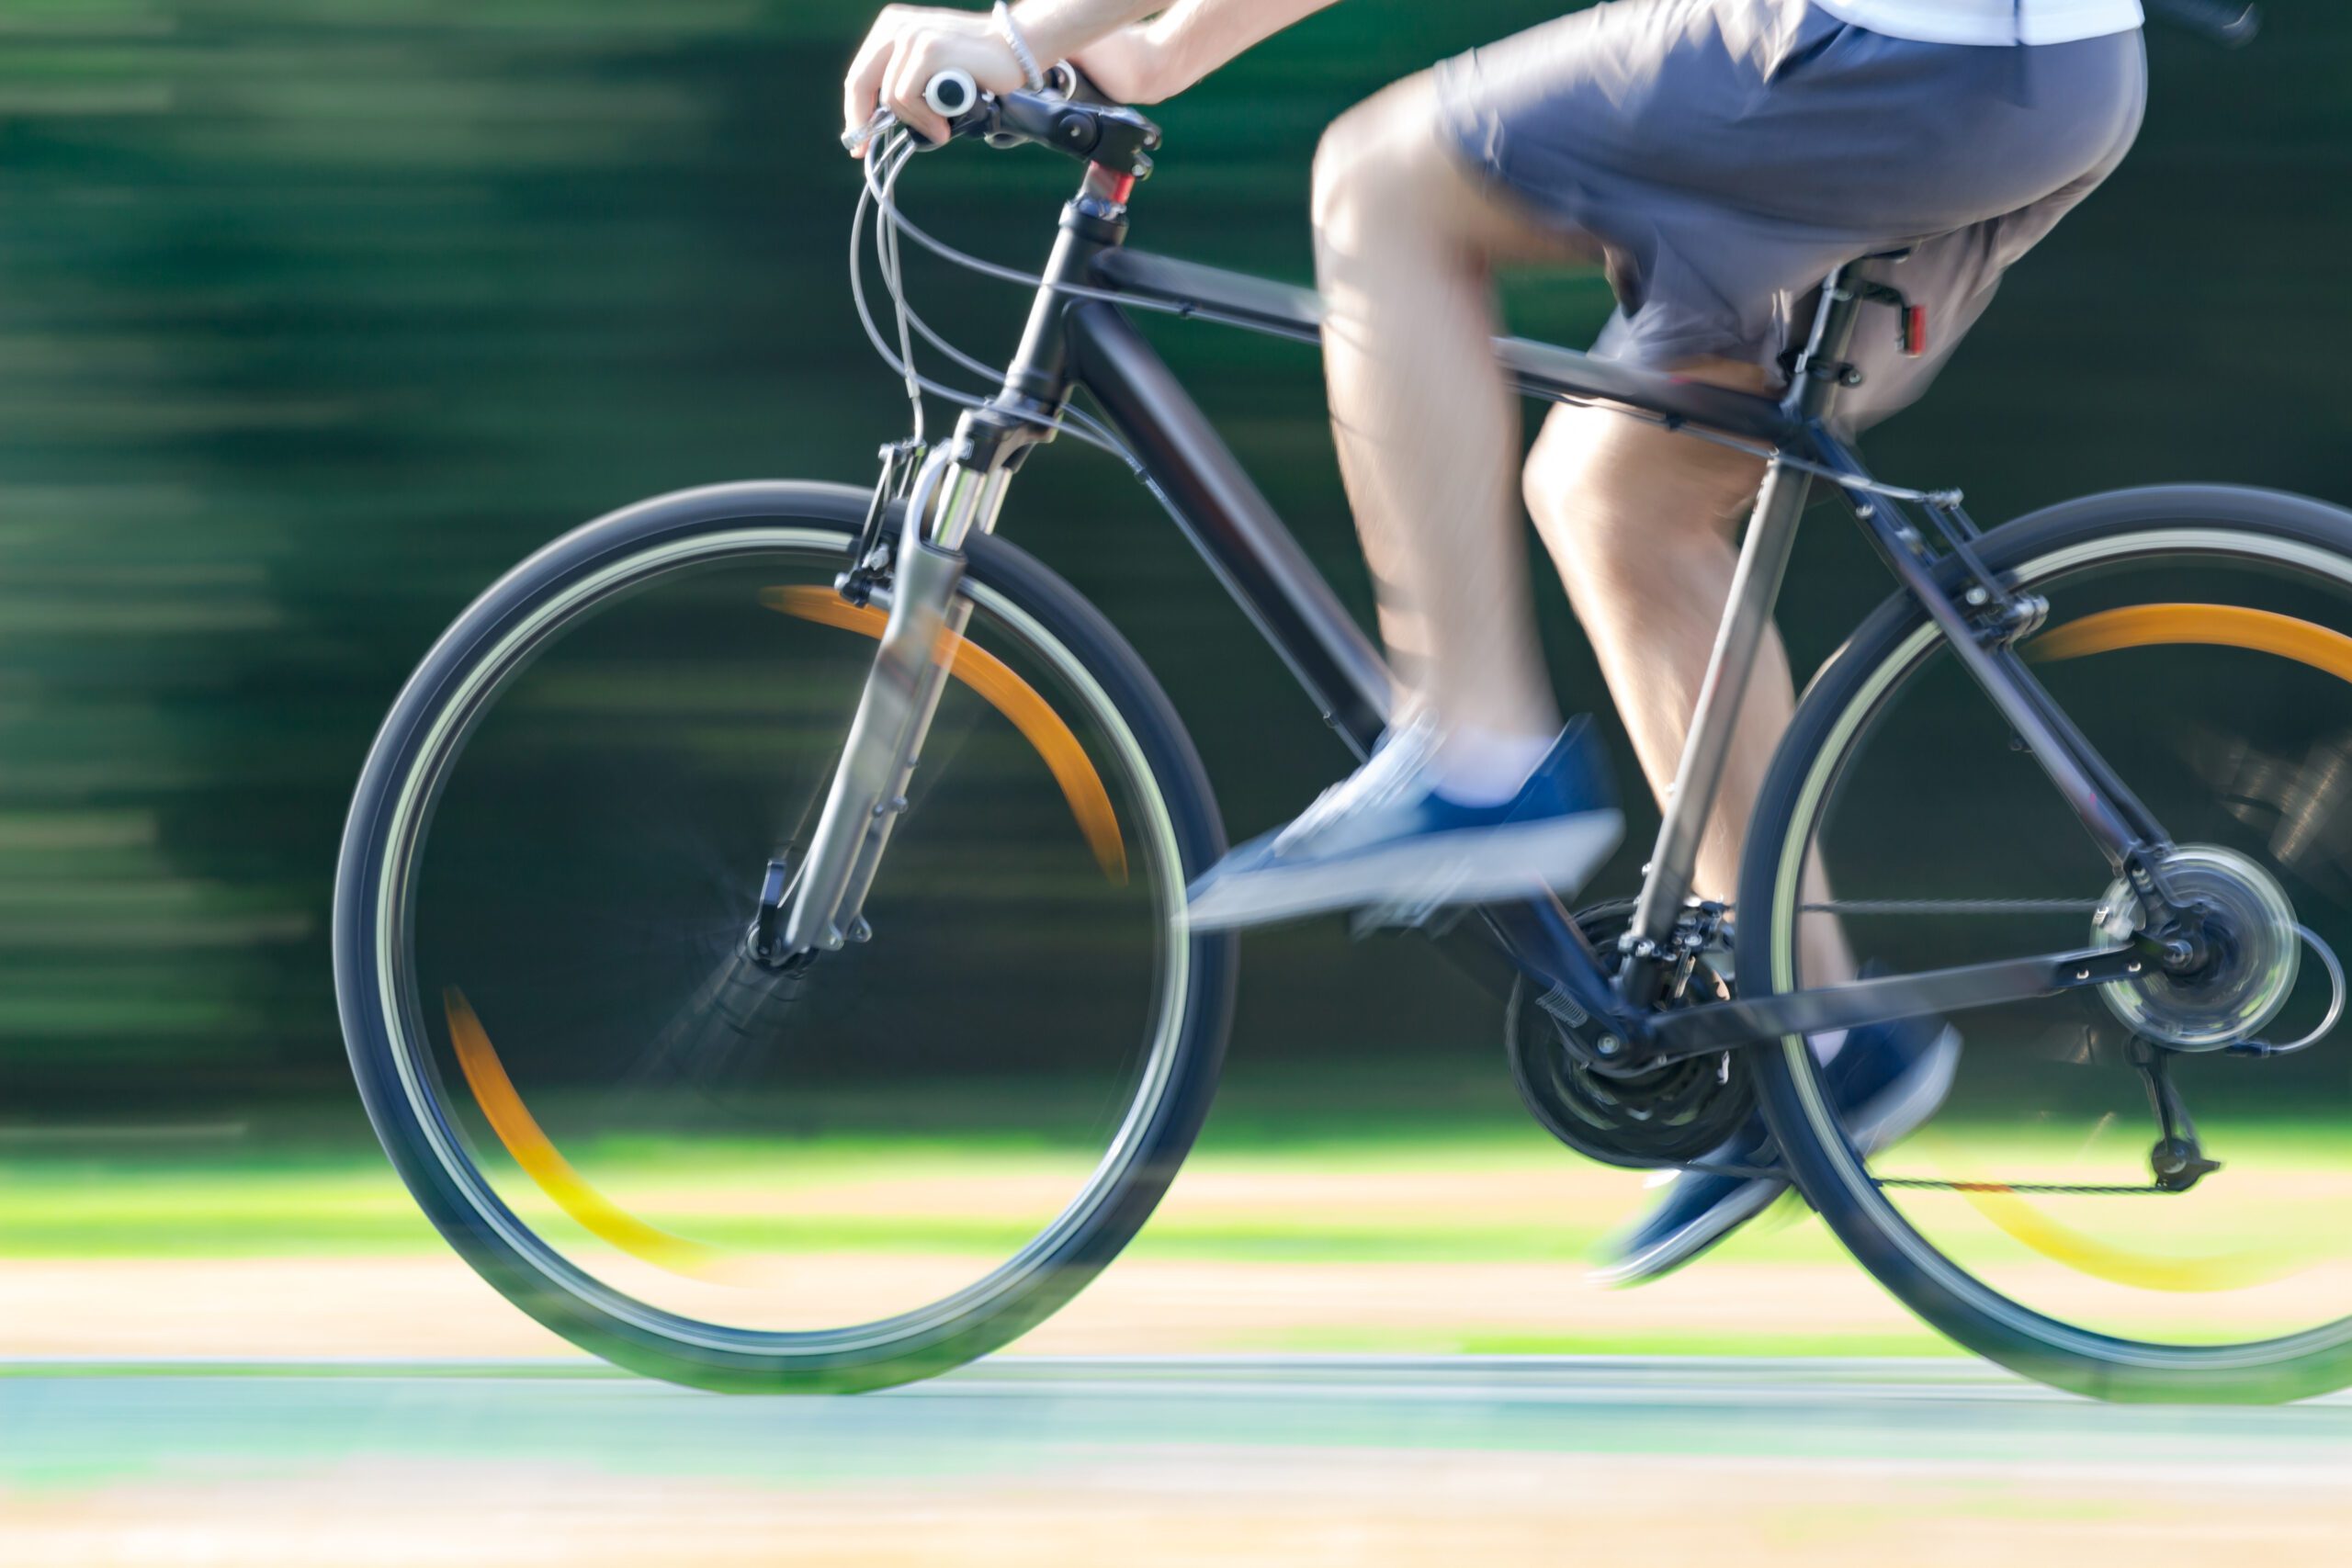 blurred cyclist riding fast